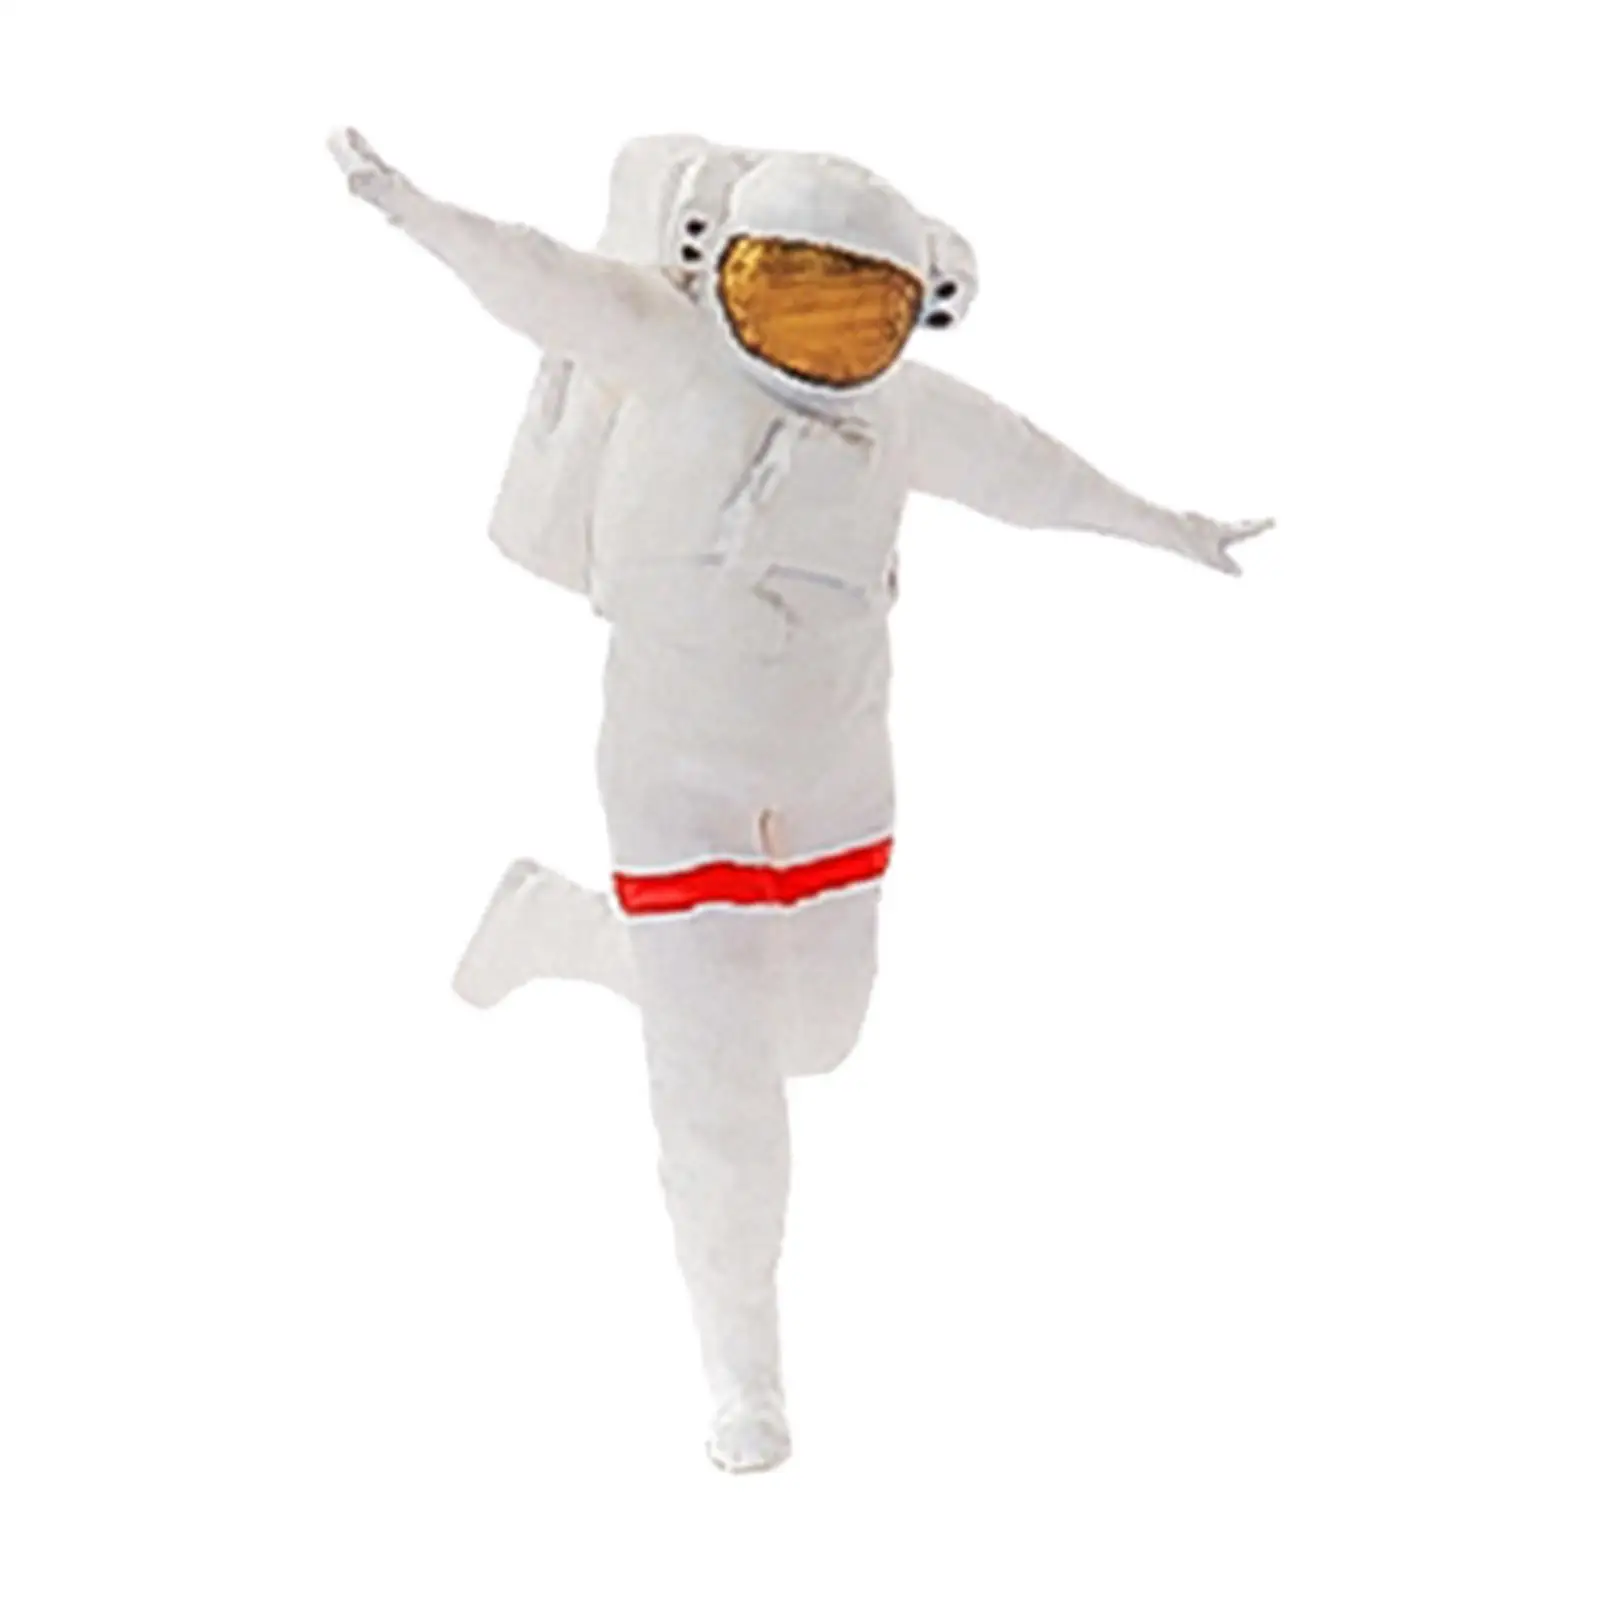 1/64 Scale Figure Spaceman Astronaut Desktop Ornament Miniature Layout